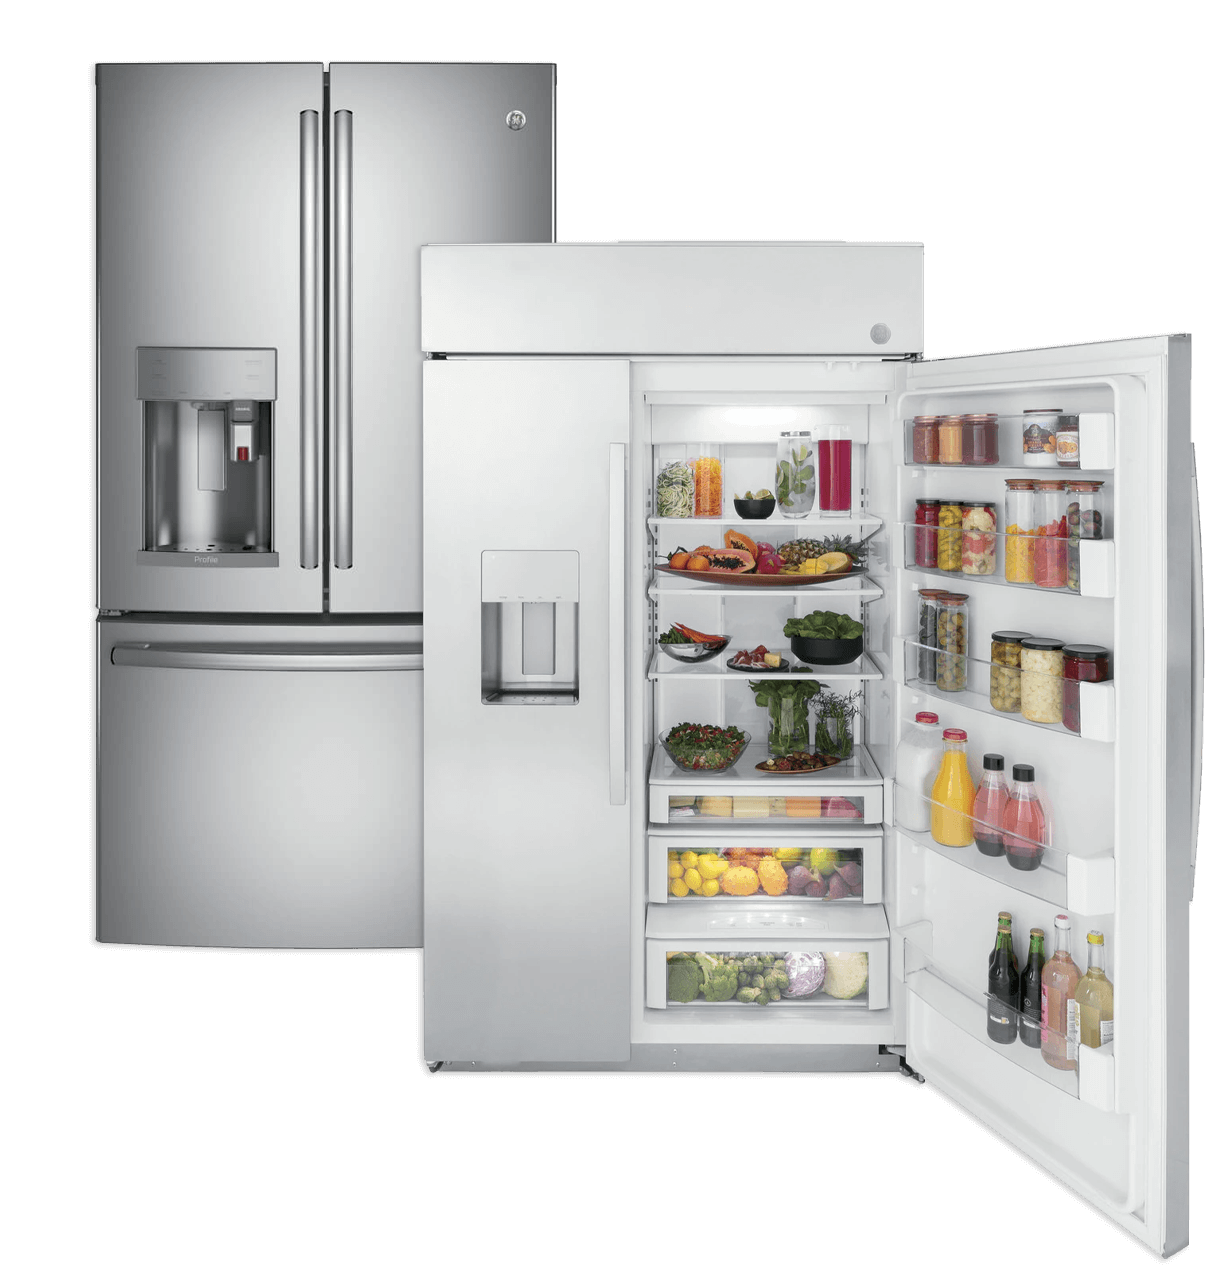 GE Profile Refrigerators